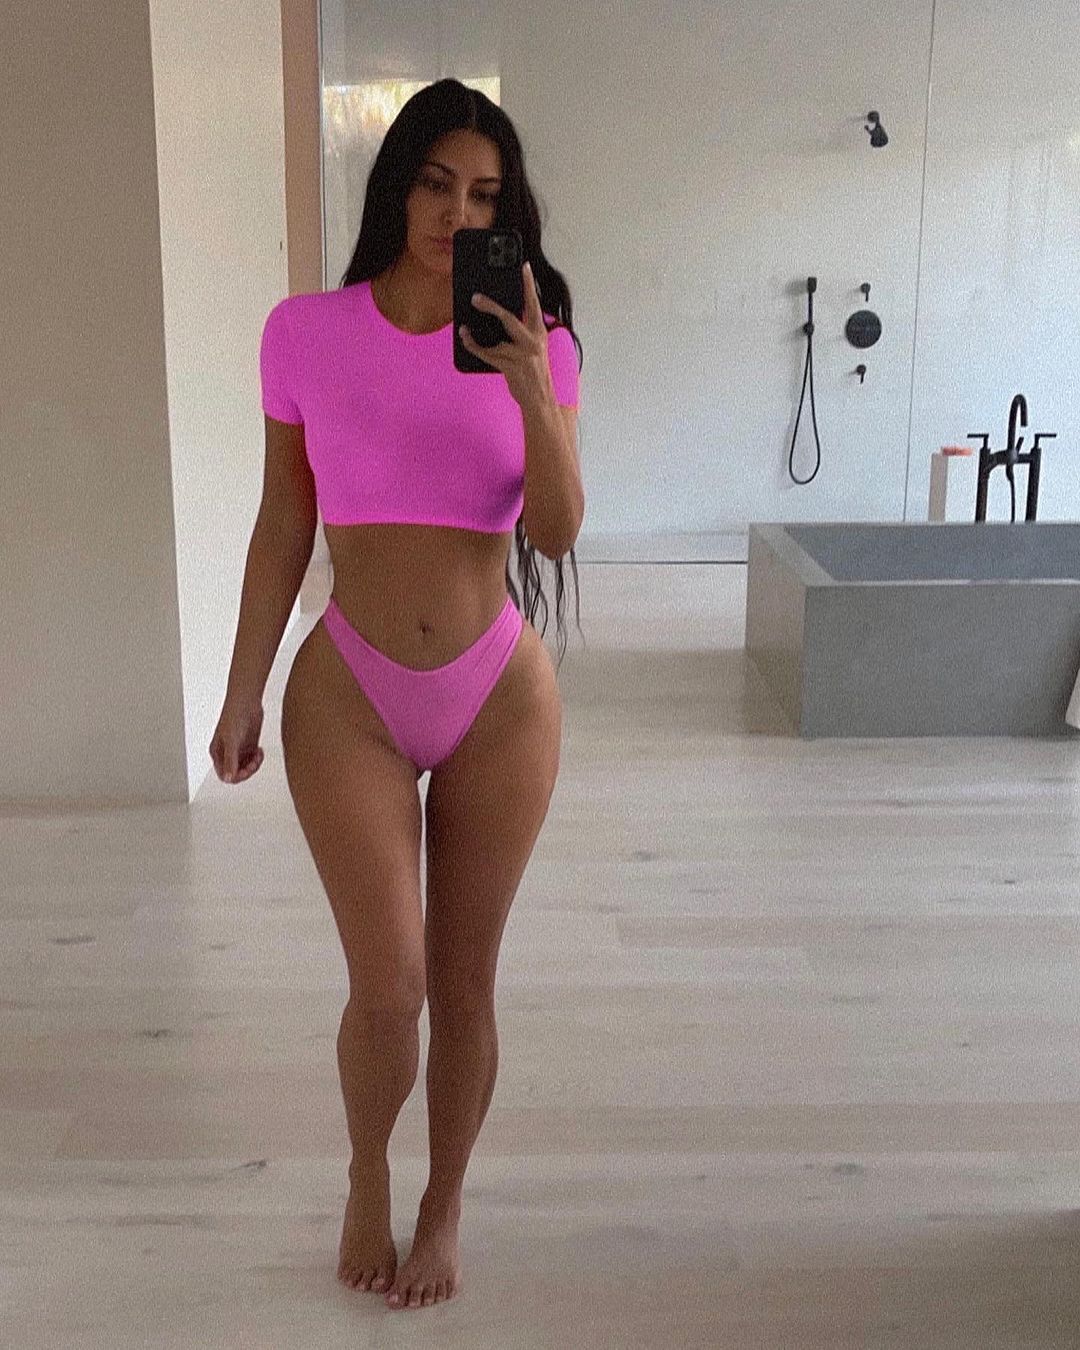 Kim Kardashian taking a selfie in her bathroom wearing a bright pink matching set.